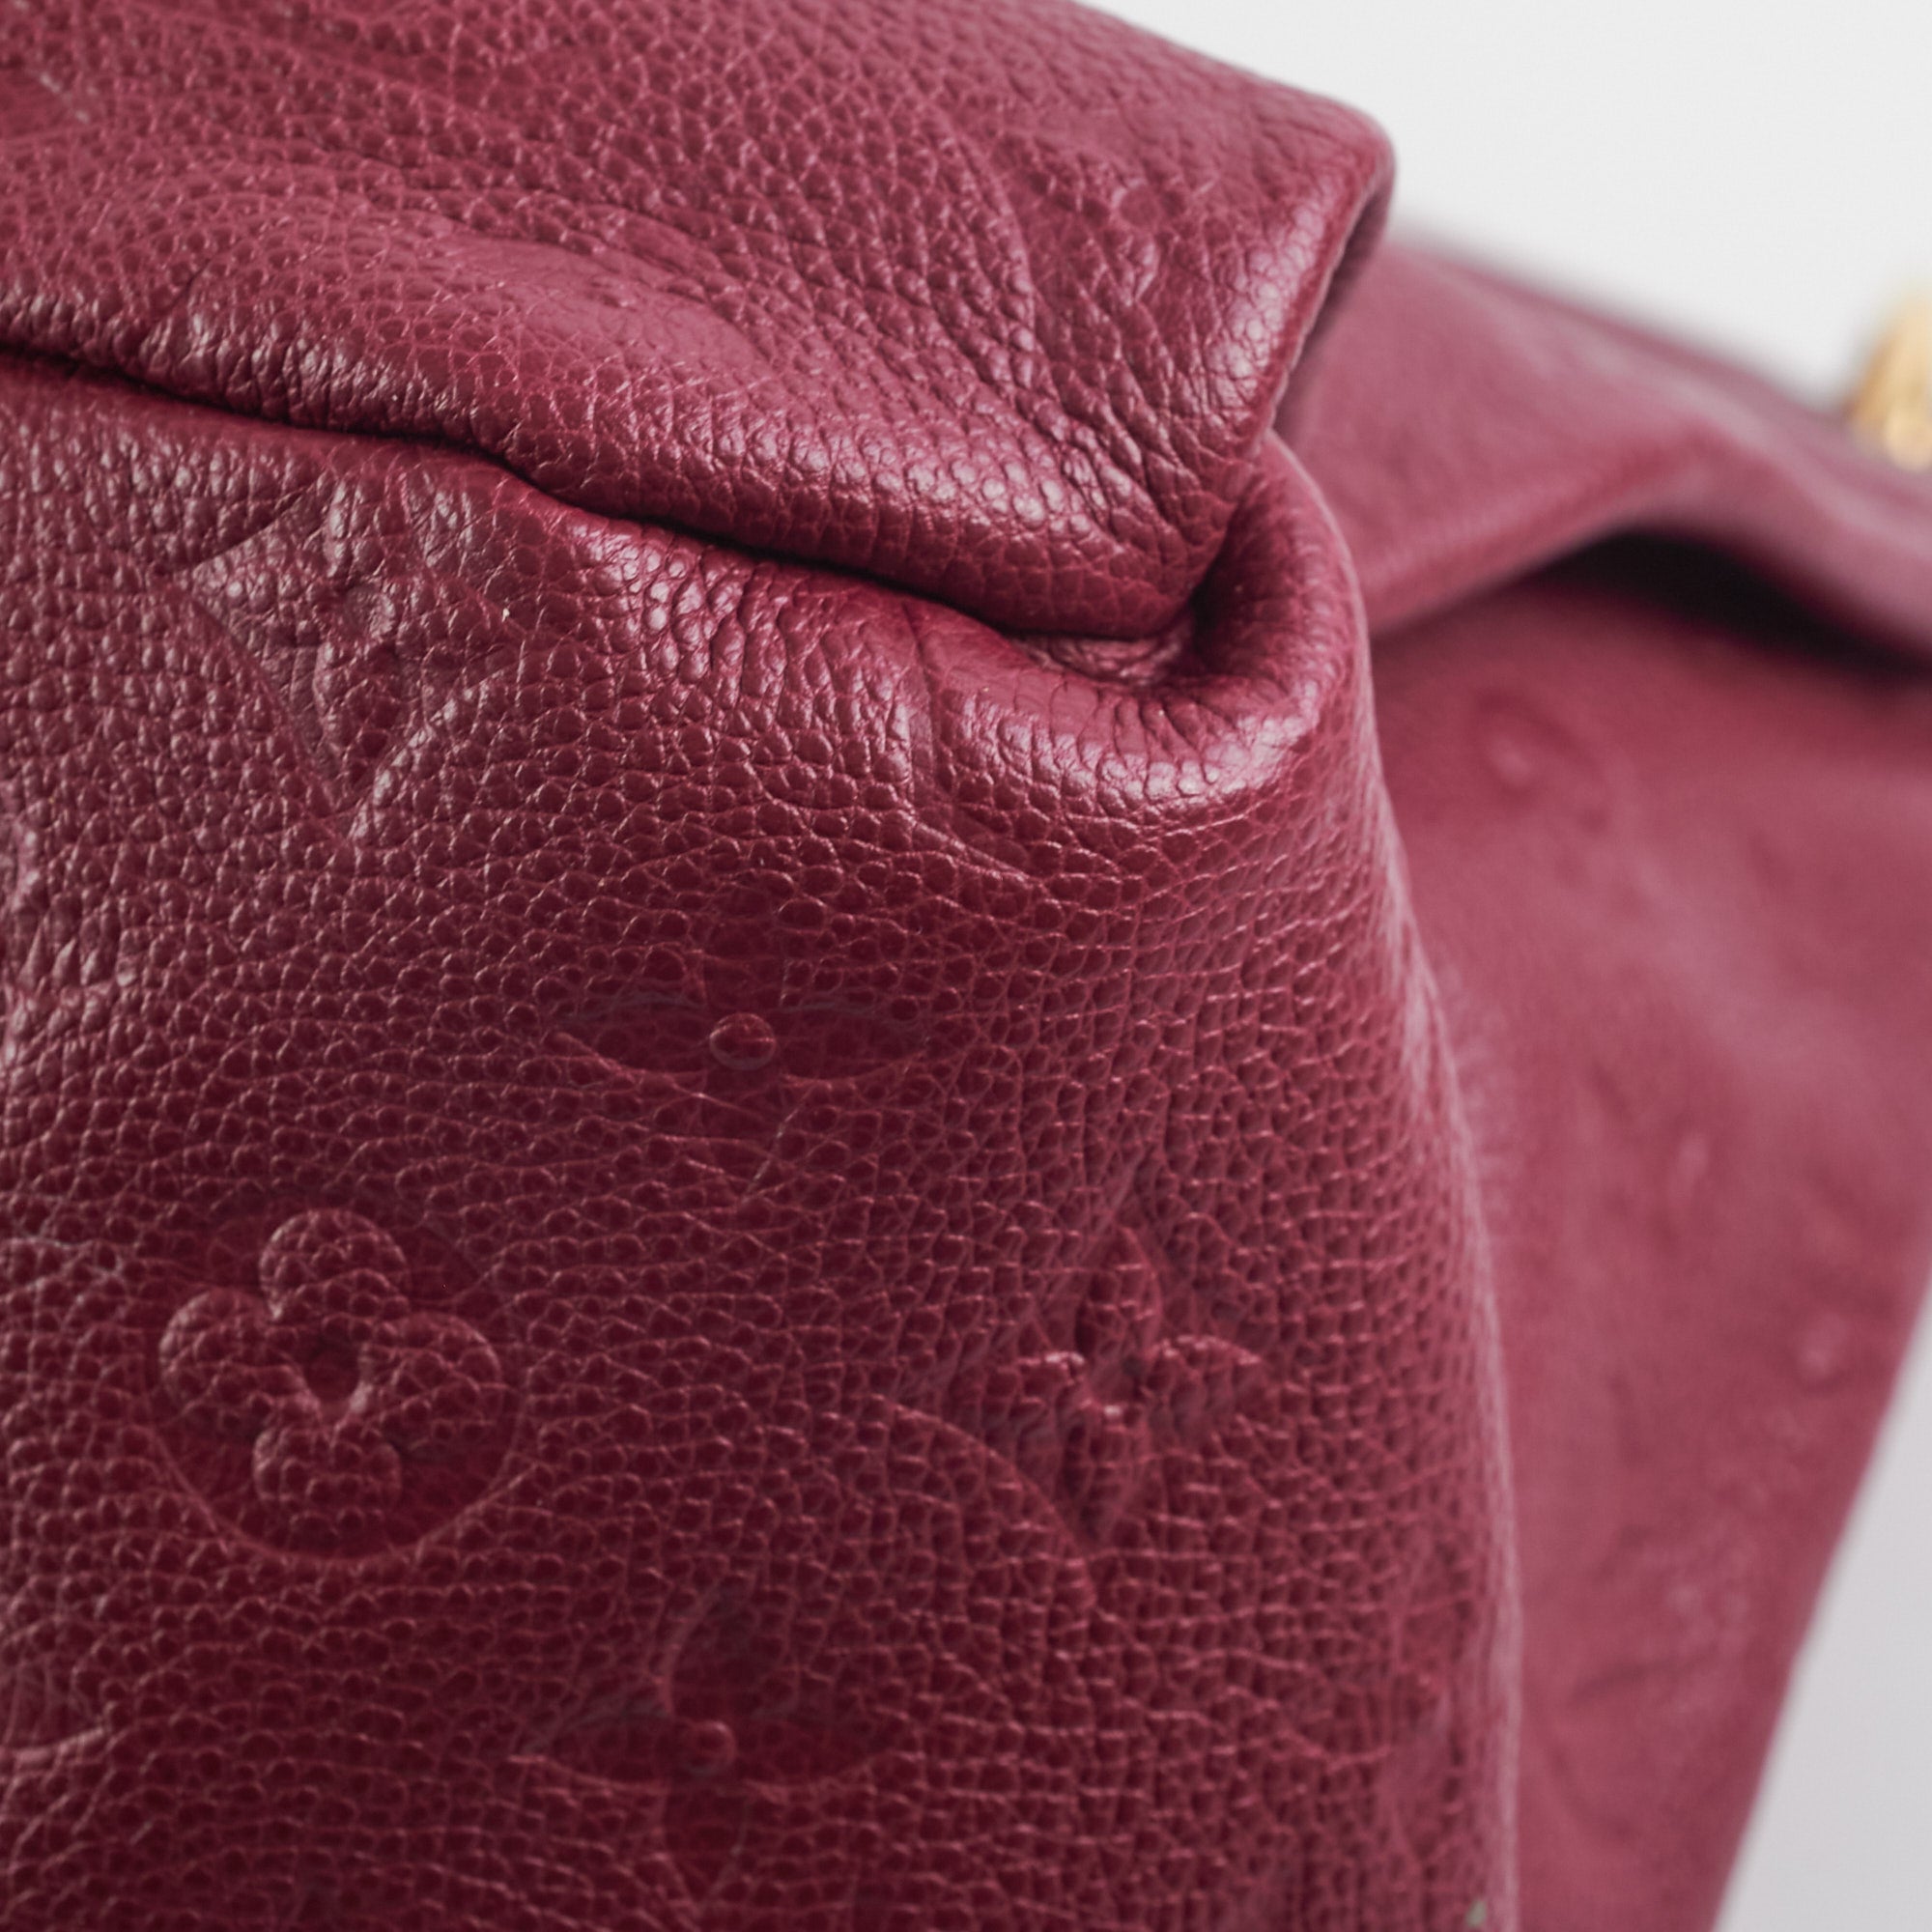 Artsy leather handbag Louis Vuitton Burgundy in Leather - 31897562